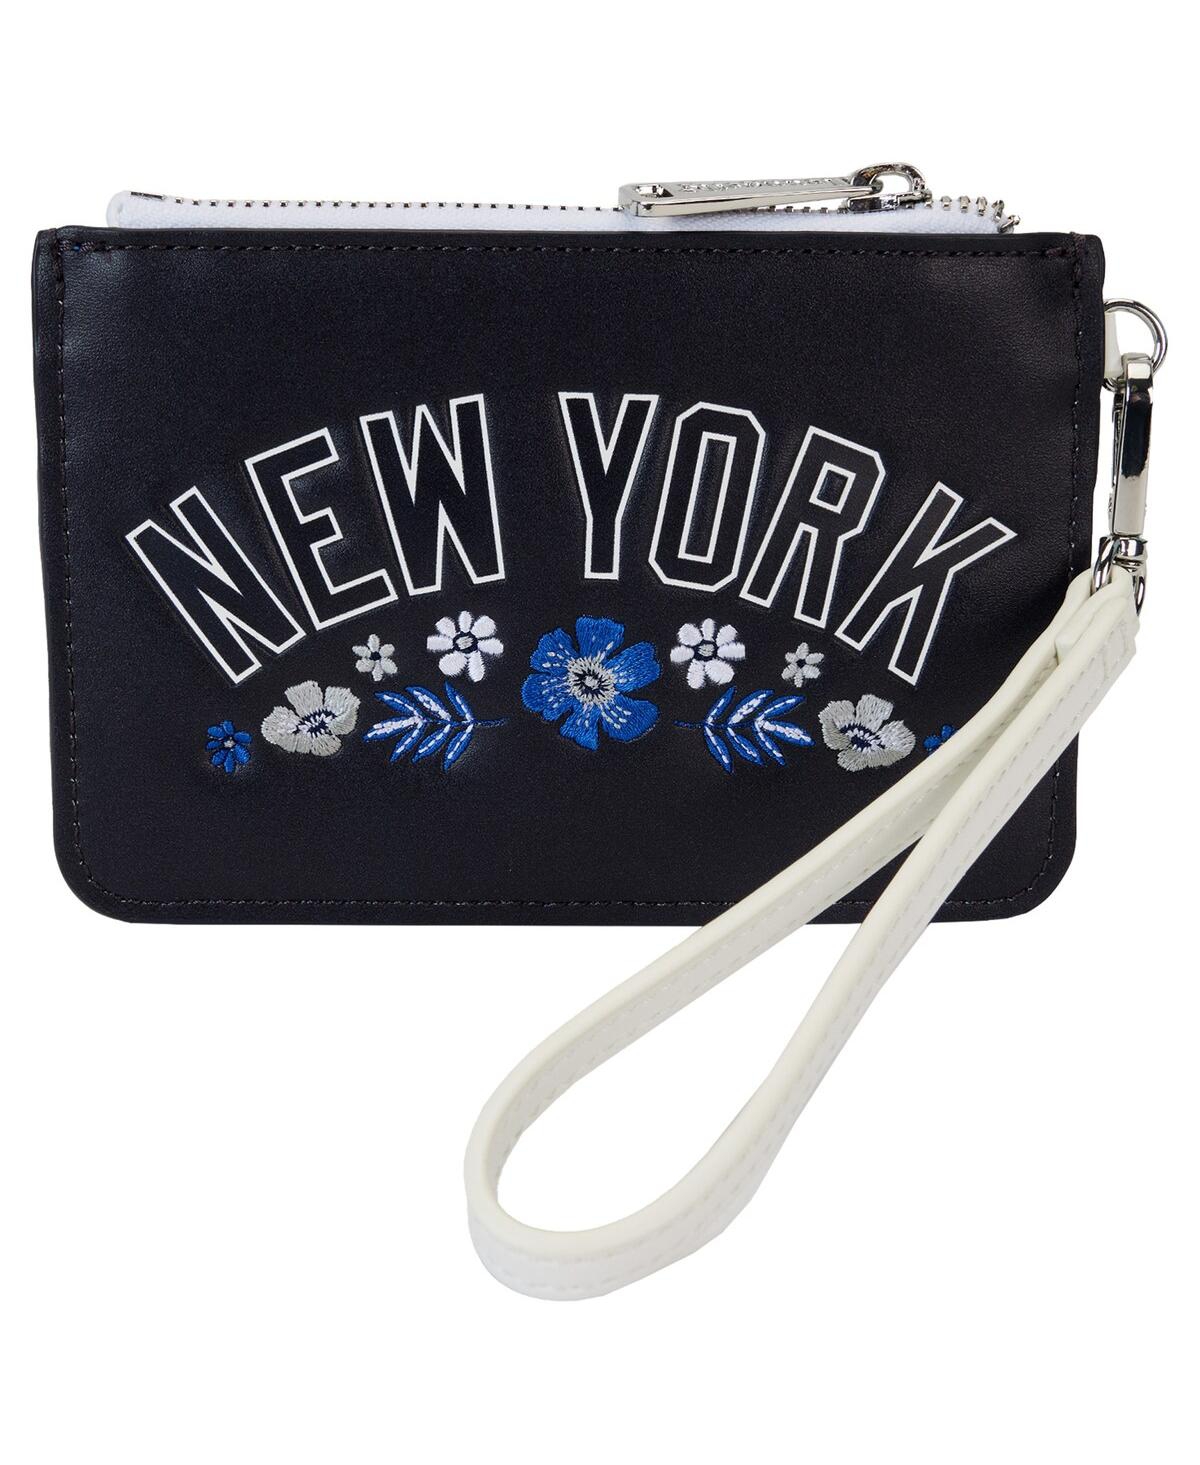 New York Yankees Floral Wrist Clutch